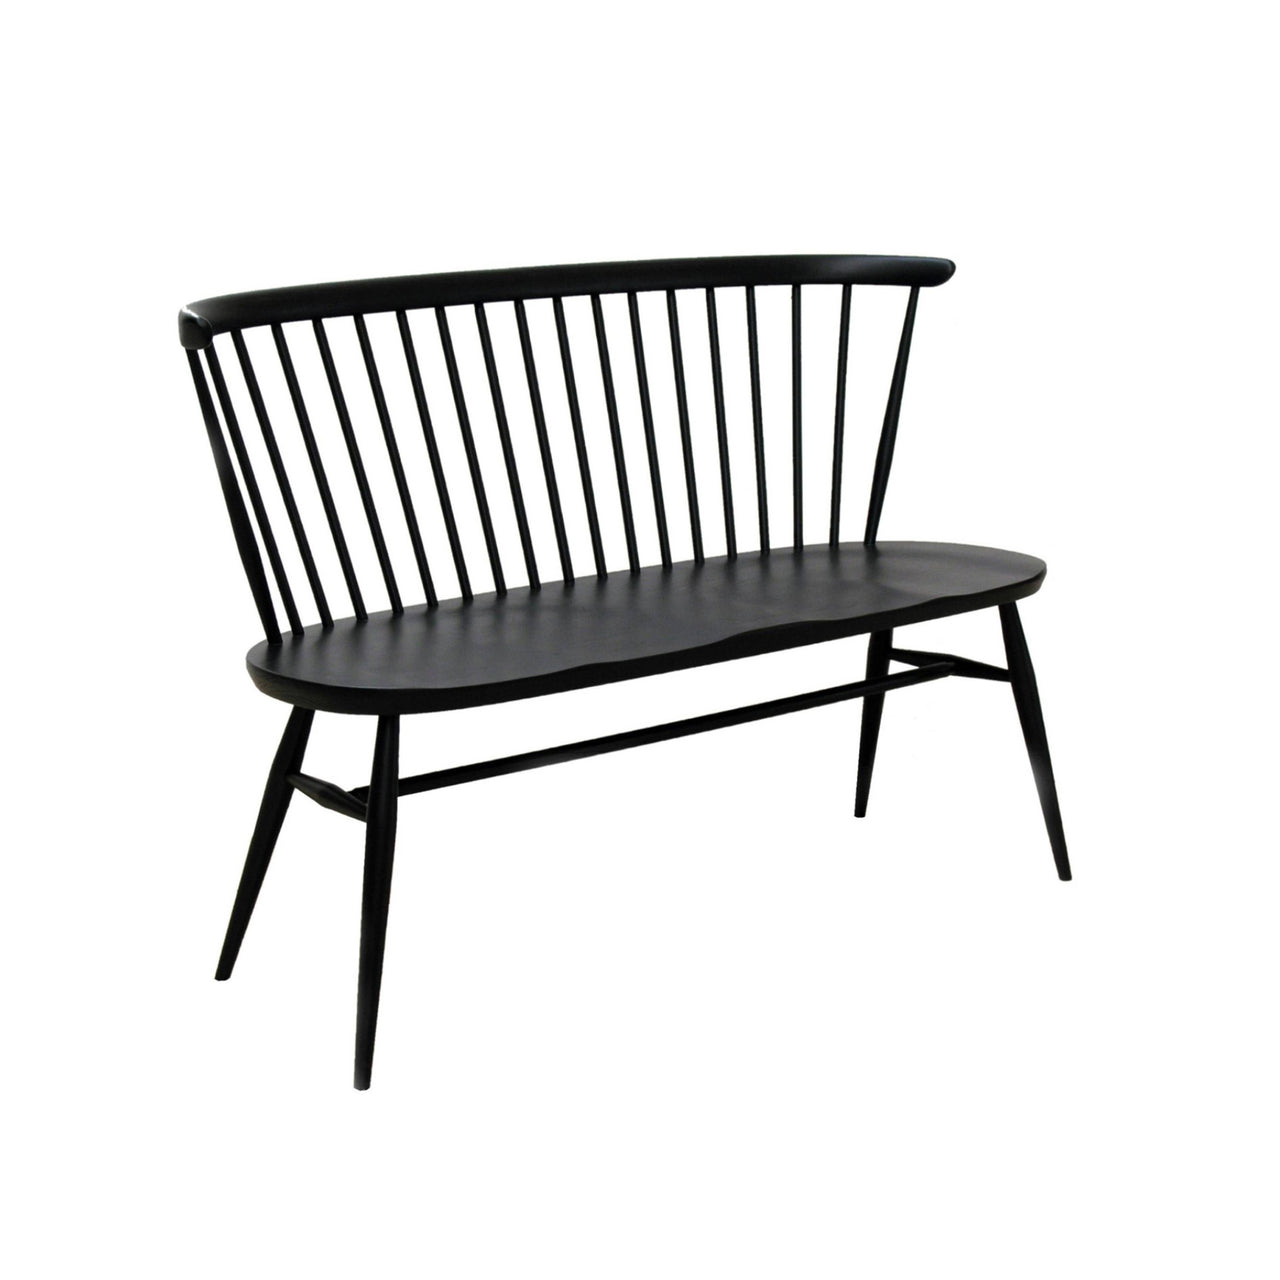 Originals Love Seat Bench: Stained Black